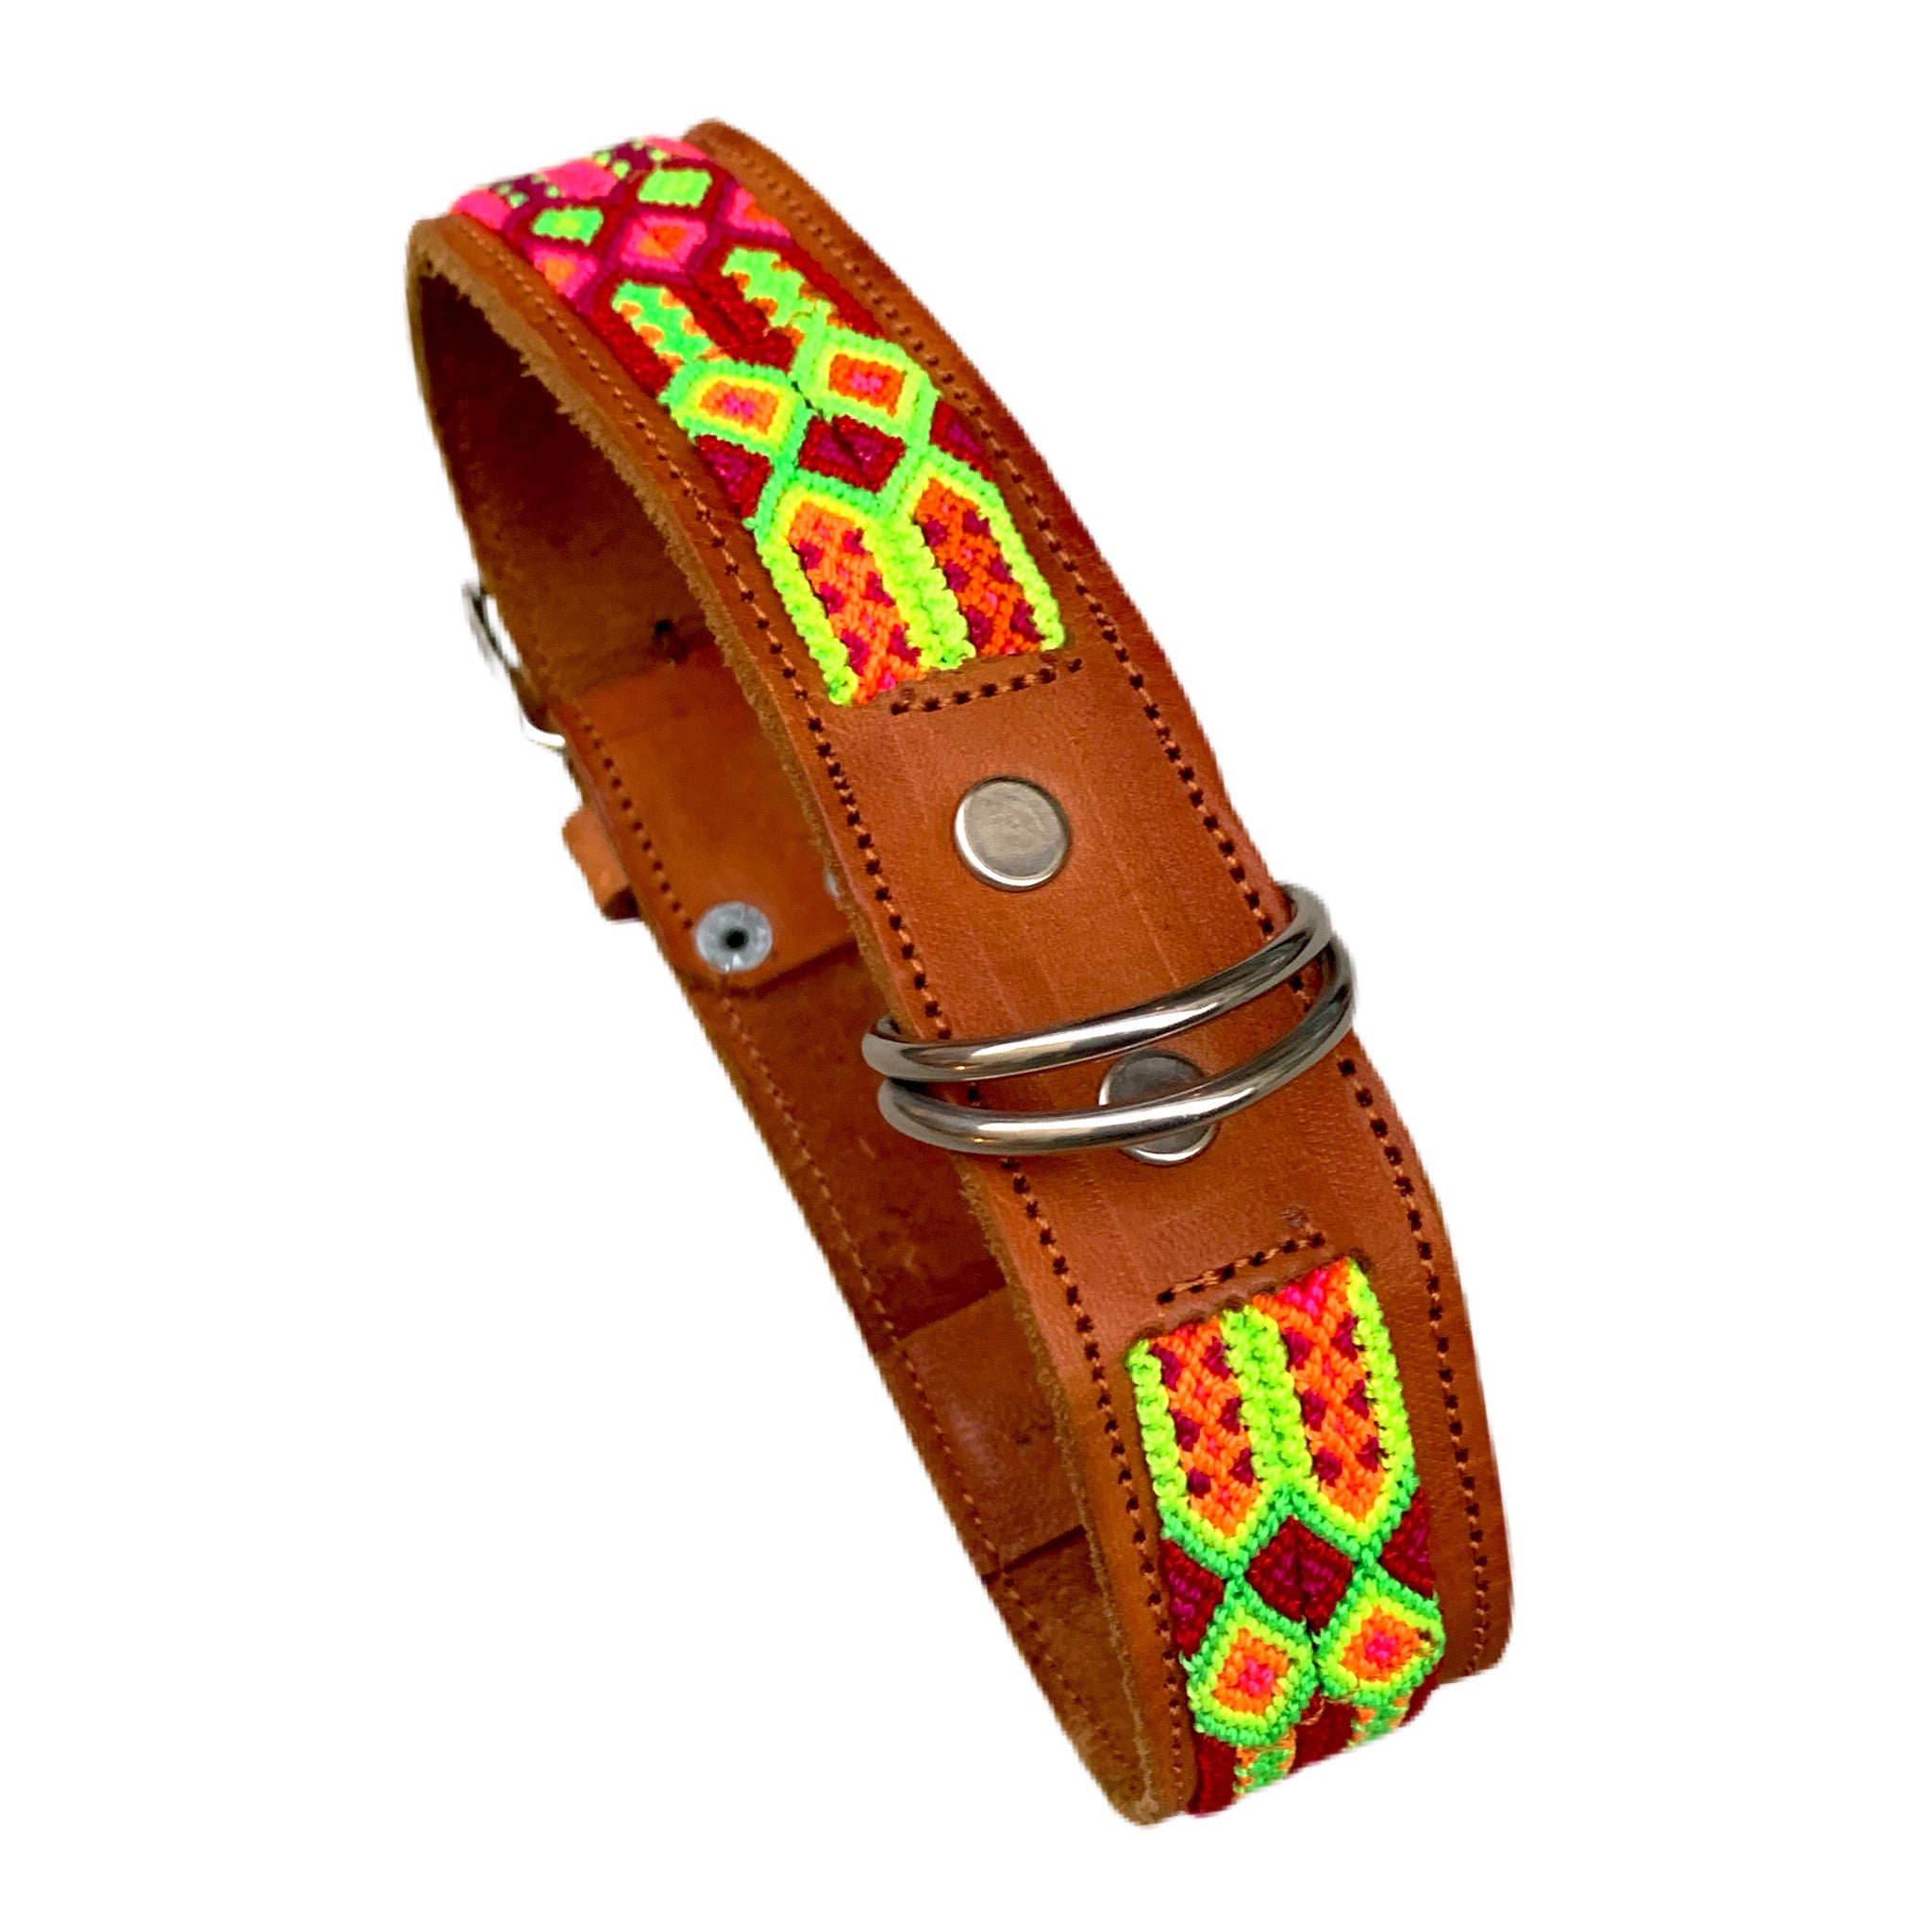 Bright Neon Friendship Bracelet Style Leather Dog Collars From Guatemala - Medium 17"-20"